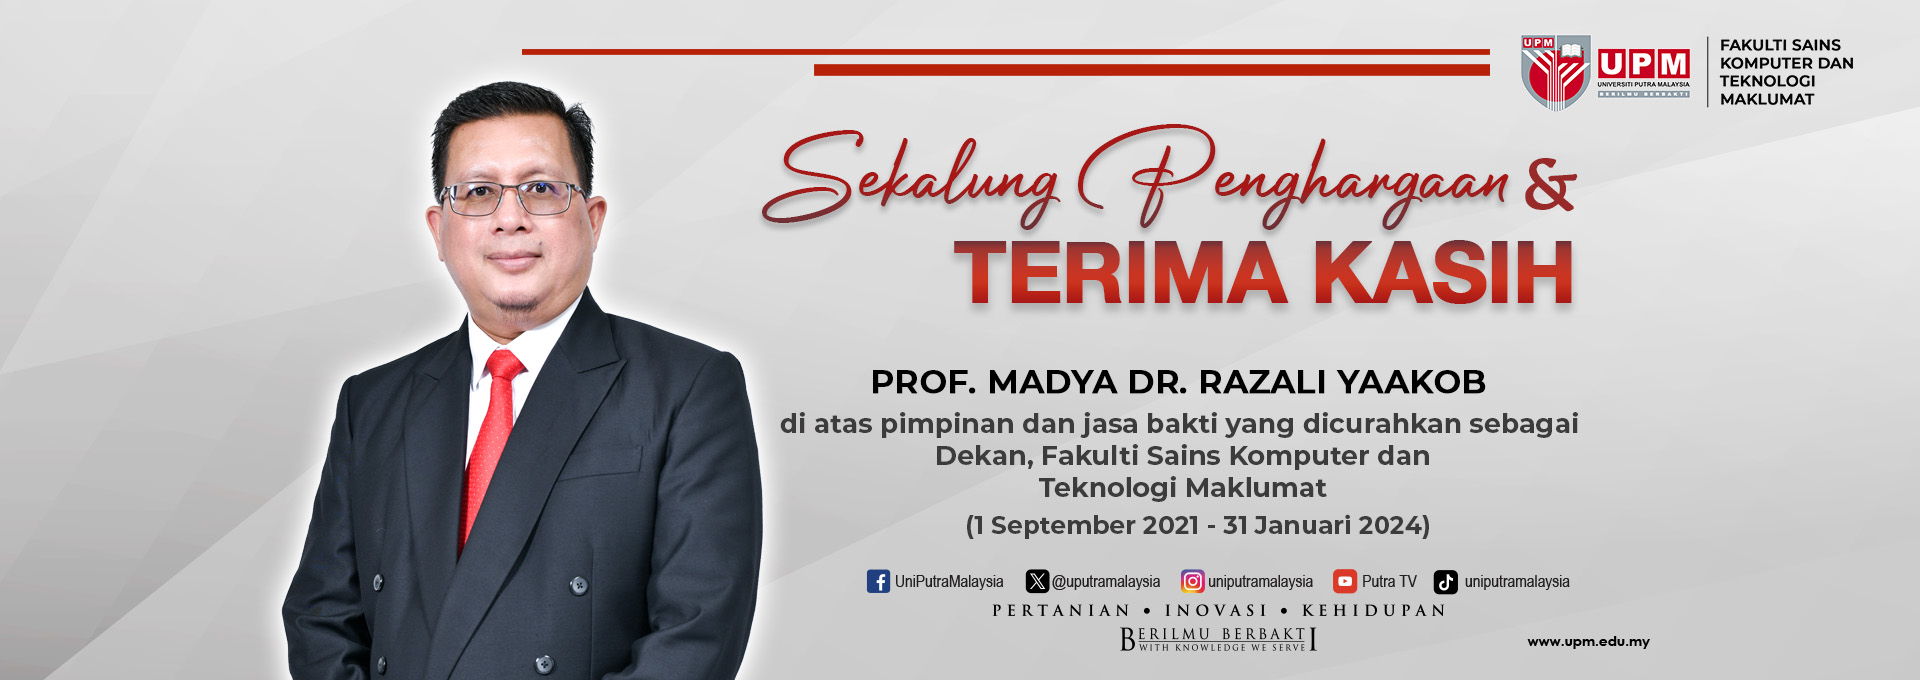 Ucapan Terima kasih Mantan Dekan PM Dr Razali